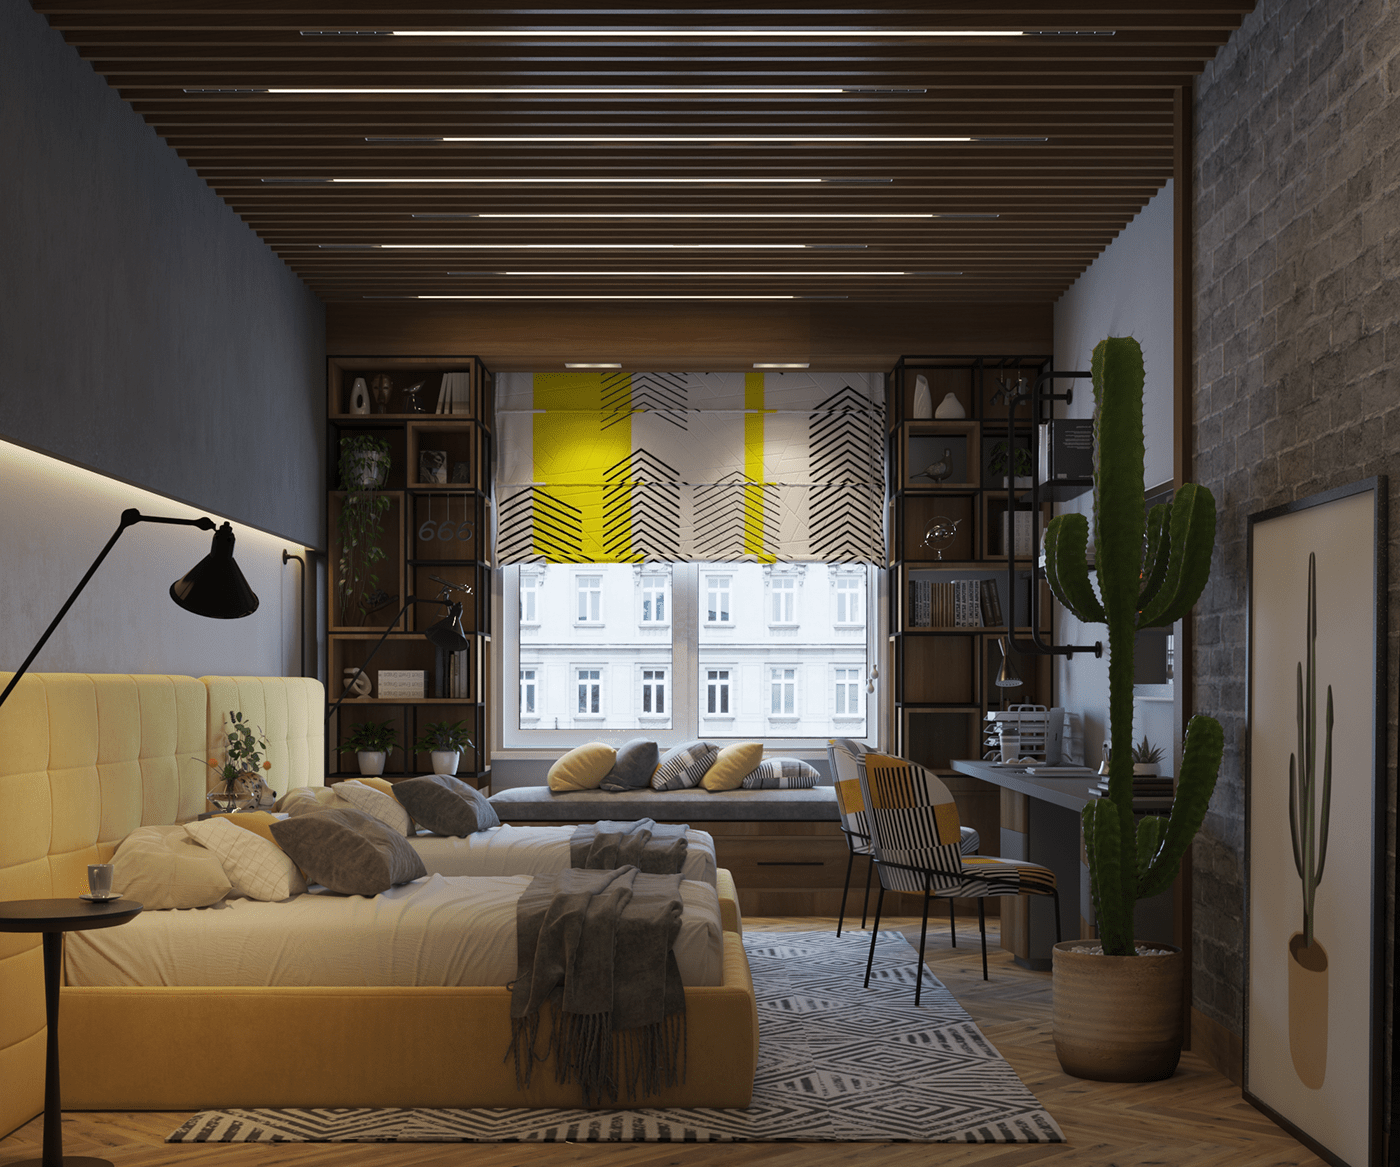 3D 3ds max architecture interior design  Render visualization vray